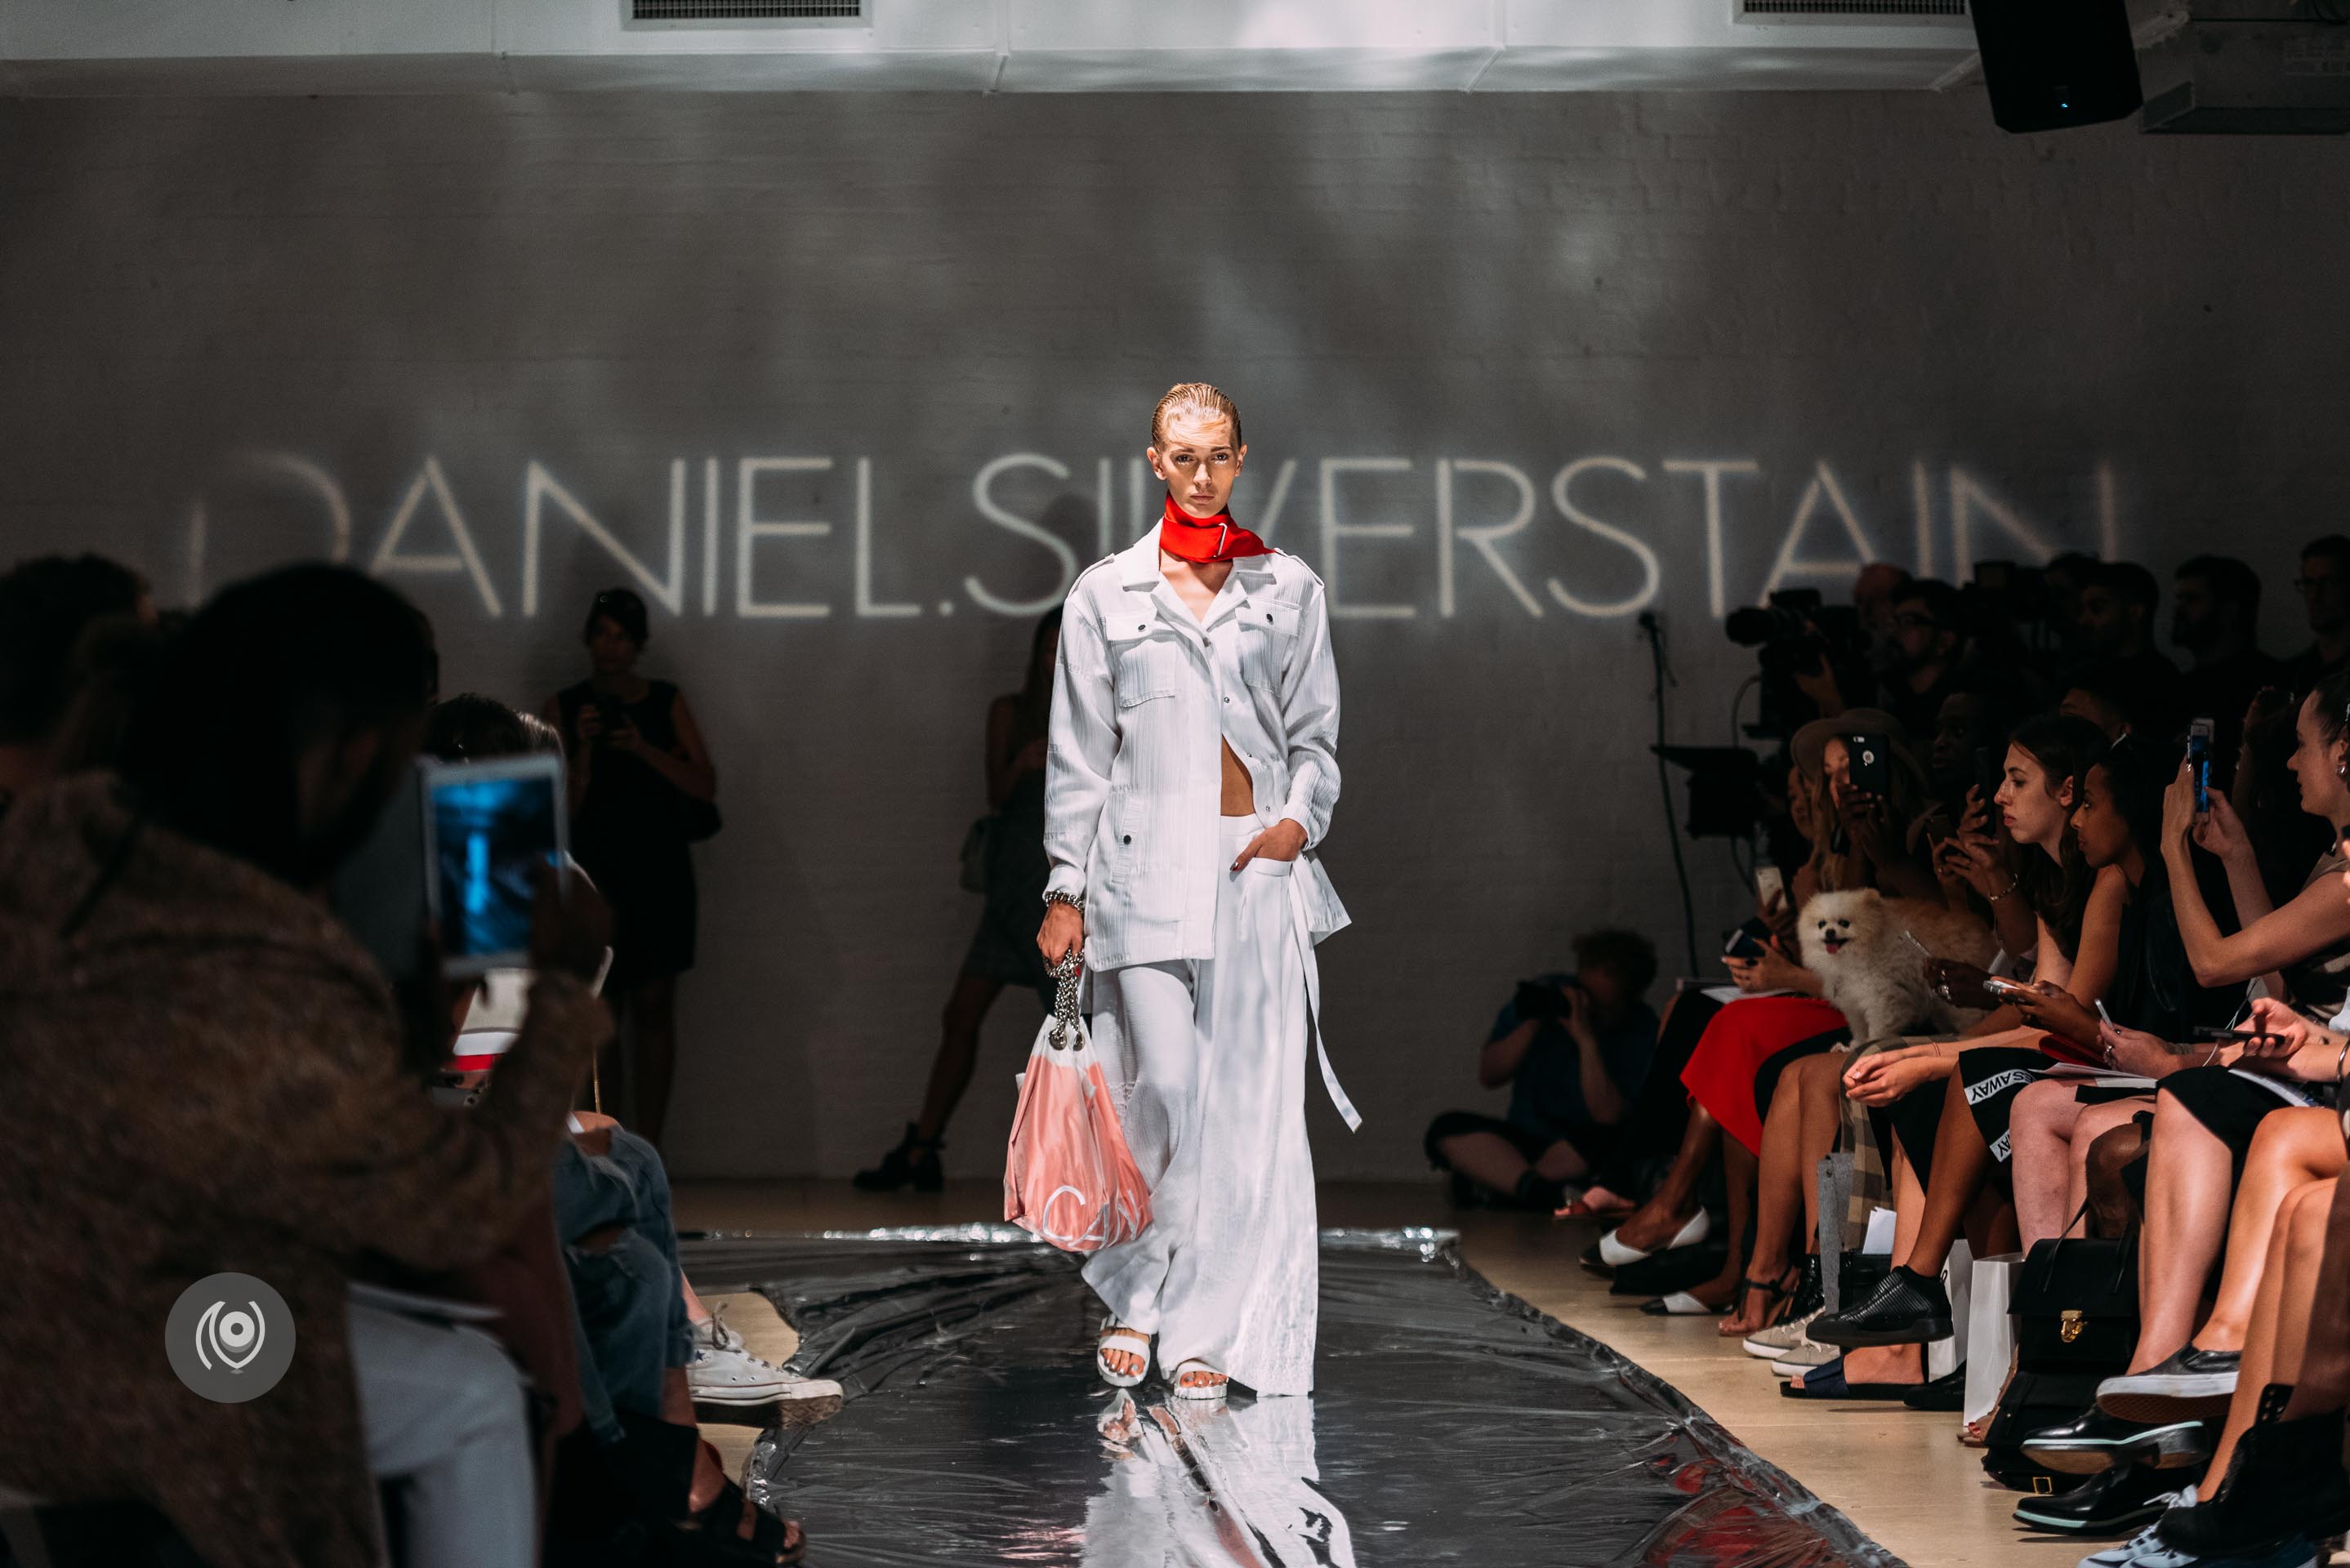 Daniel Silverstain, New York Fashion Week, #EyesForNewYork #REDHUxNYC Naina.co Luxury & Lifestyle, Photographer Storyteller, Blogger